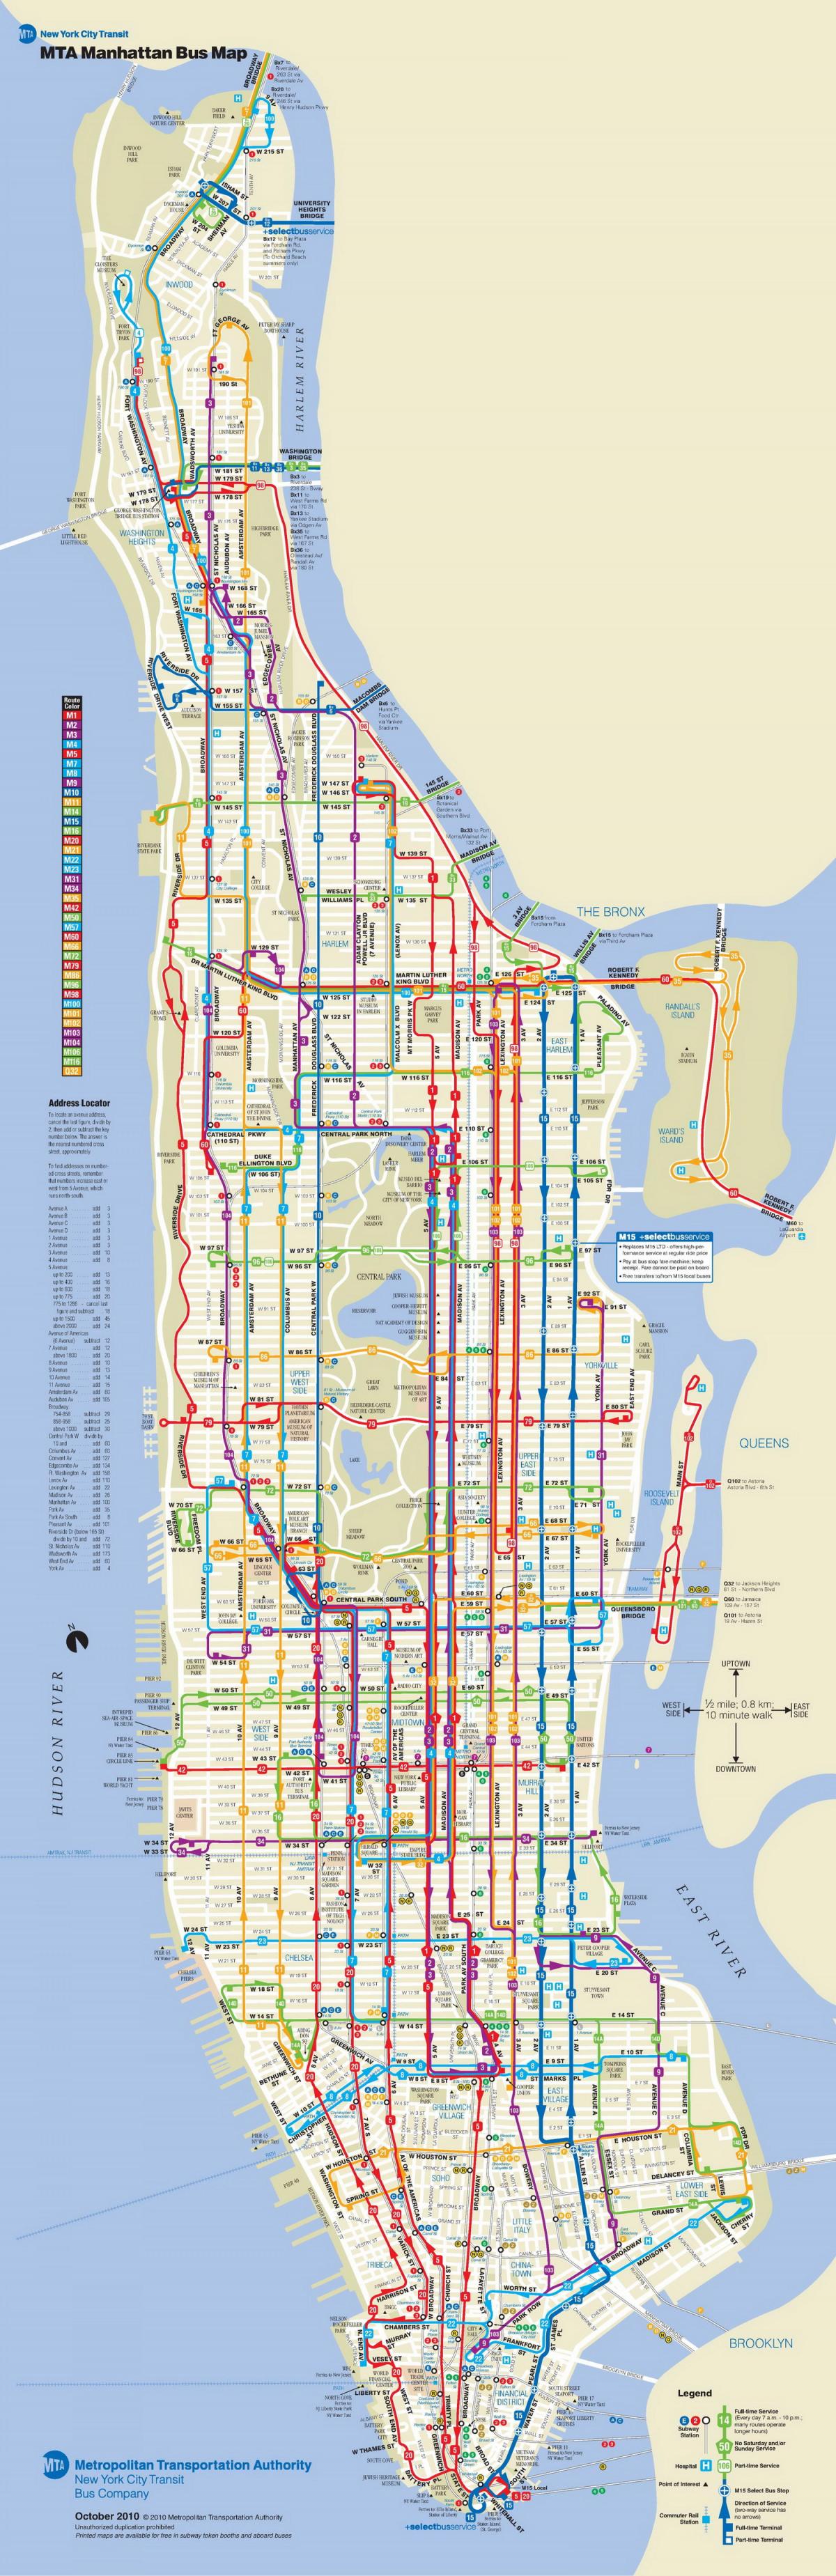 NYC bus mappa di Manhattan